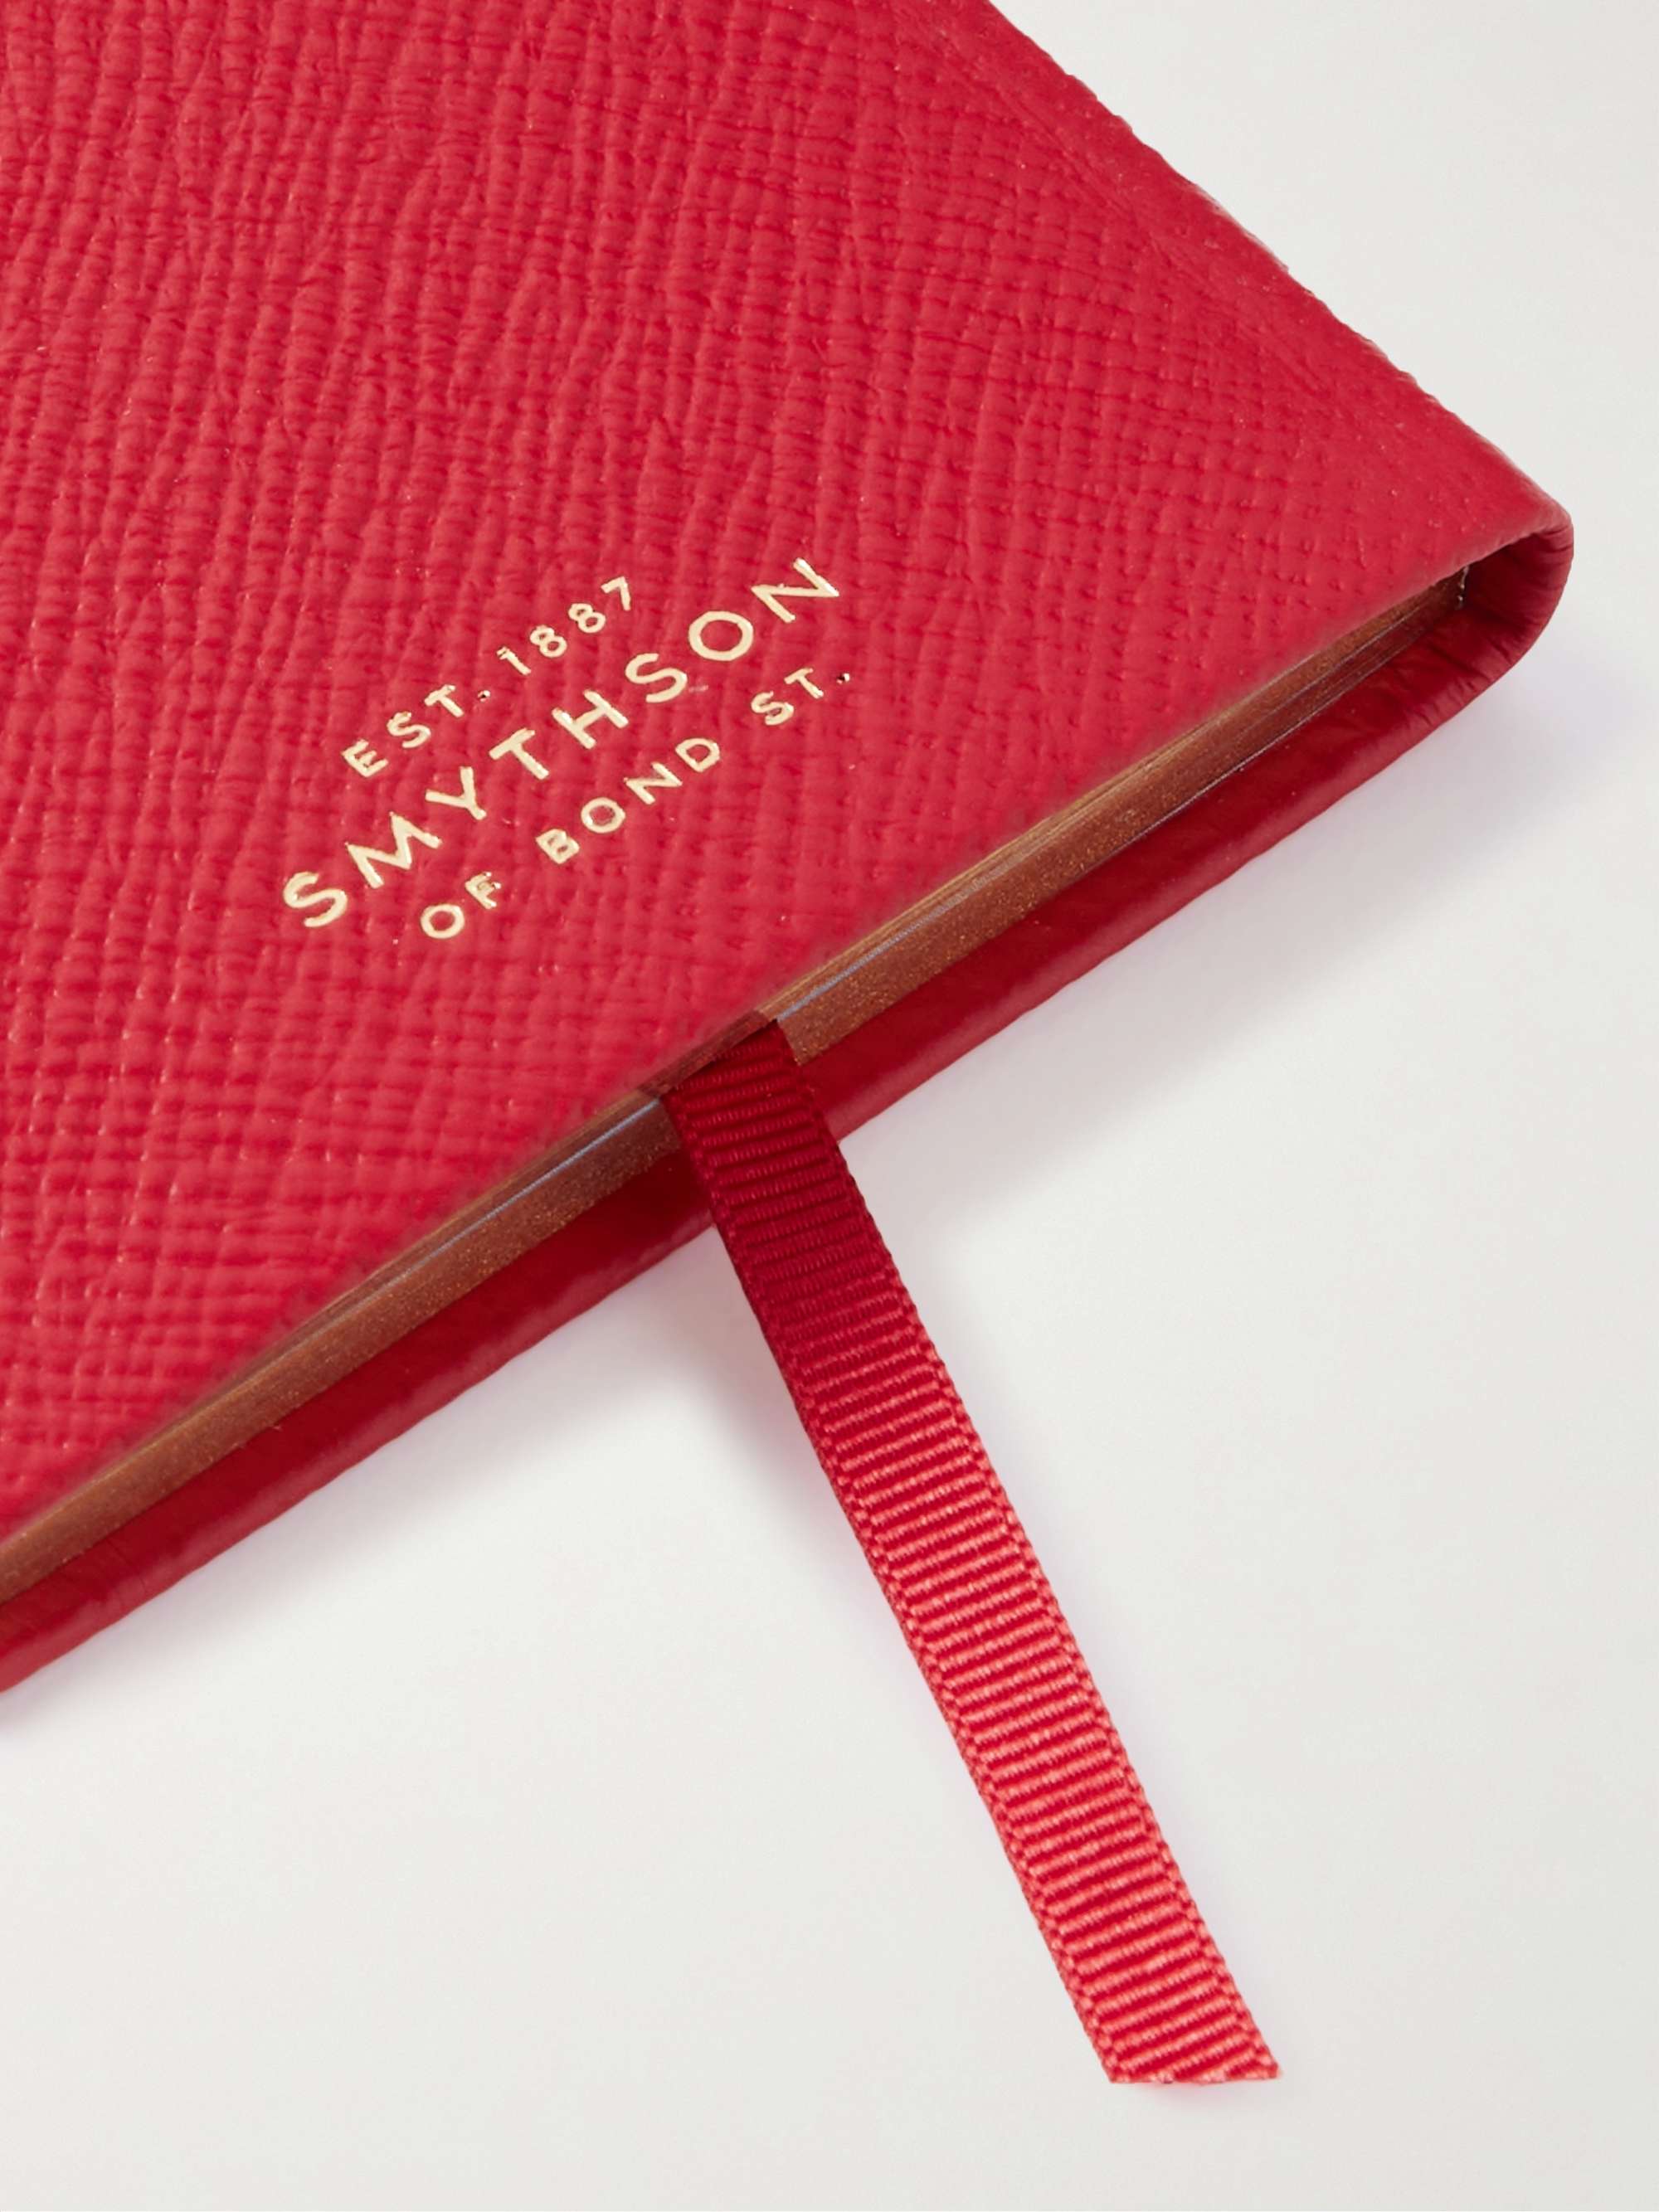 SMYTHSON Panama Cross-Grain Leather Notebook